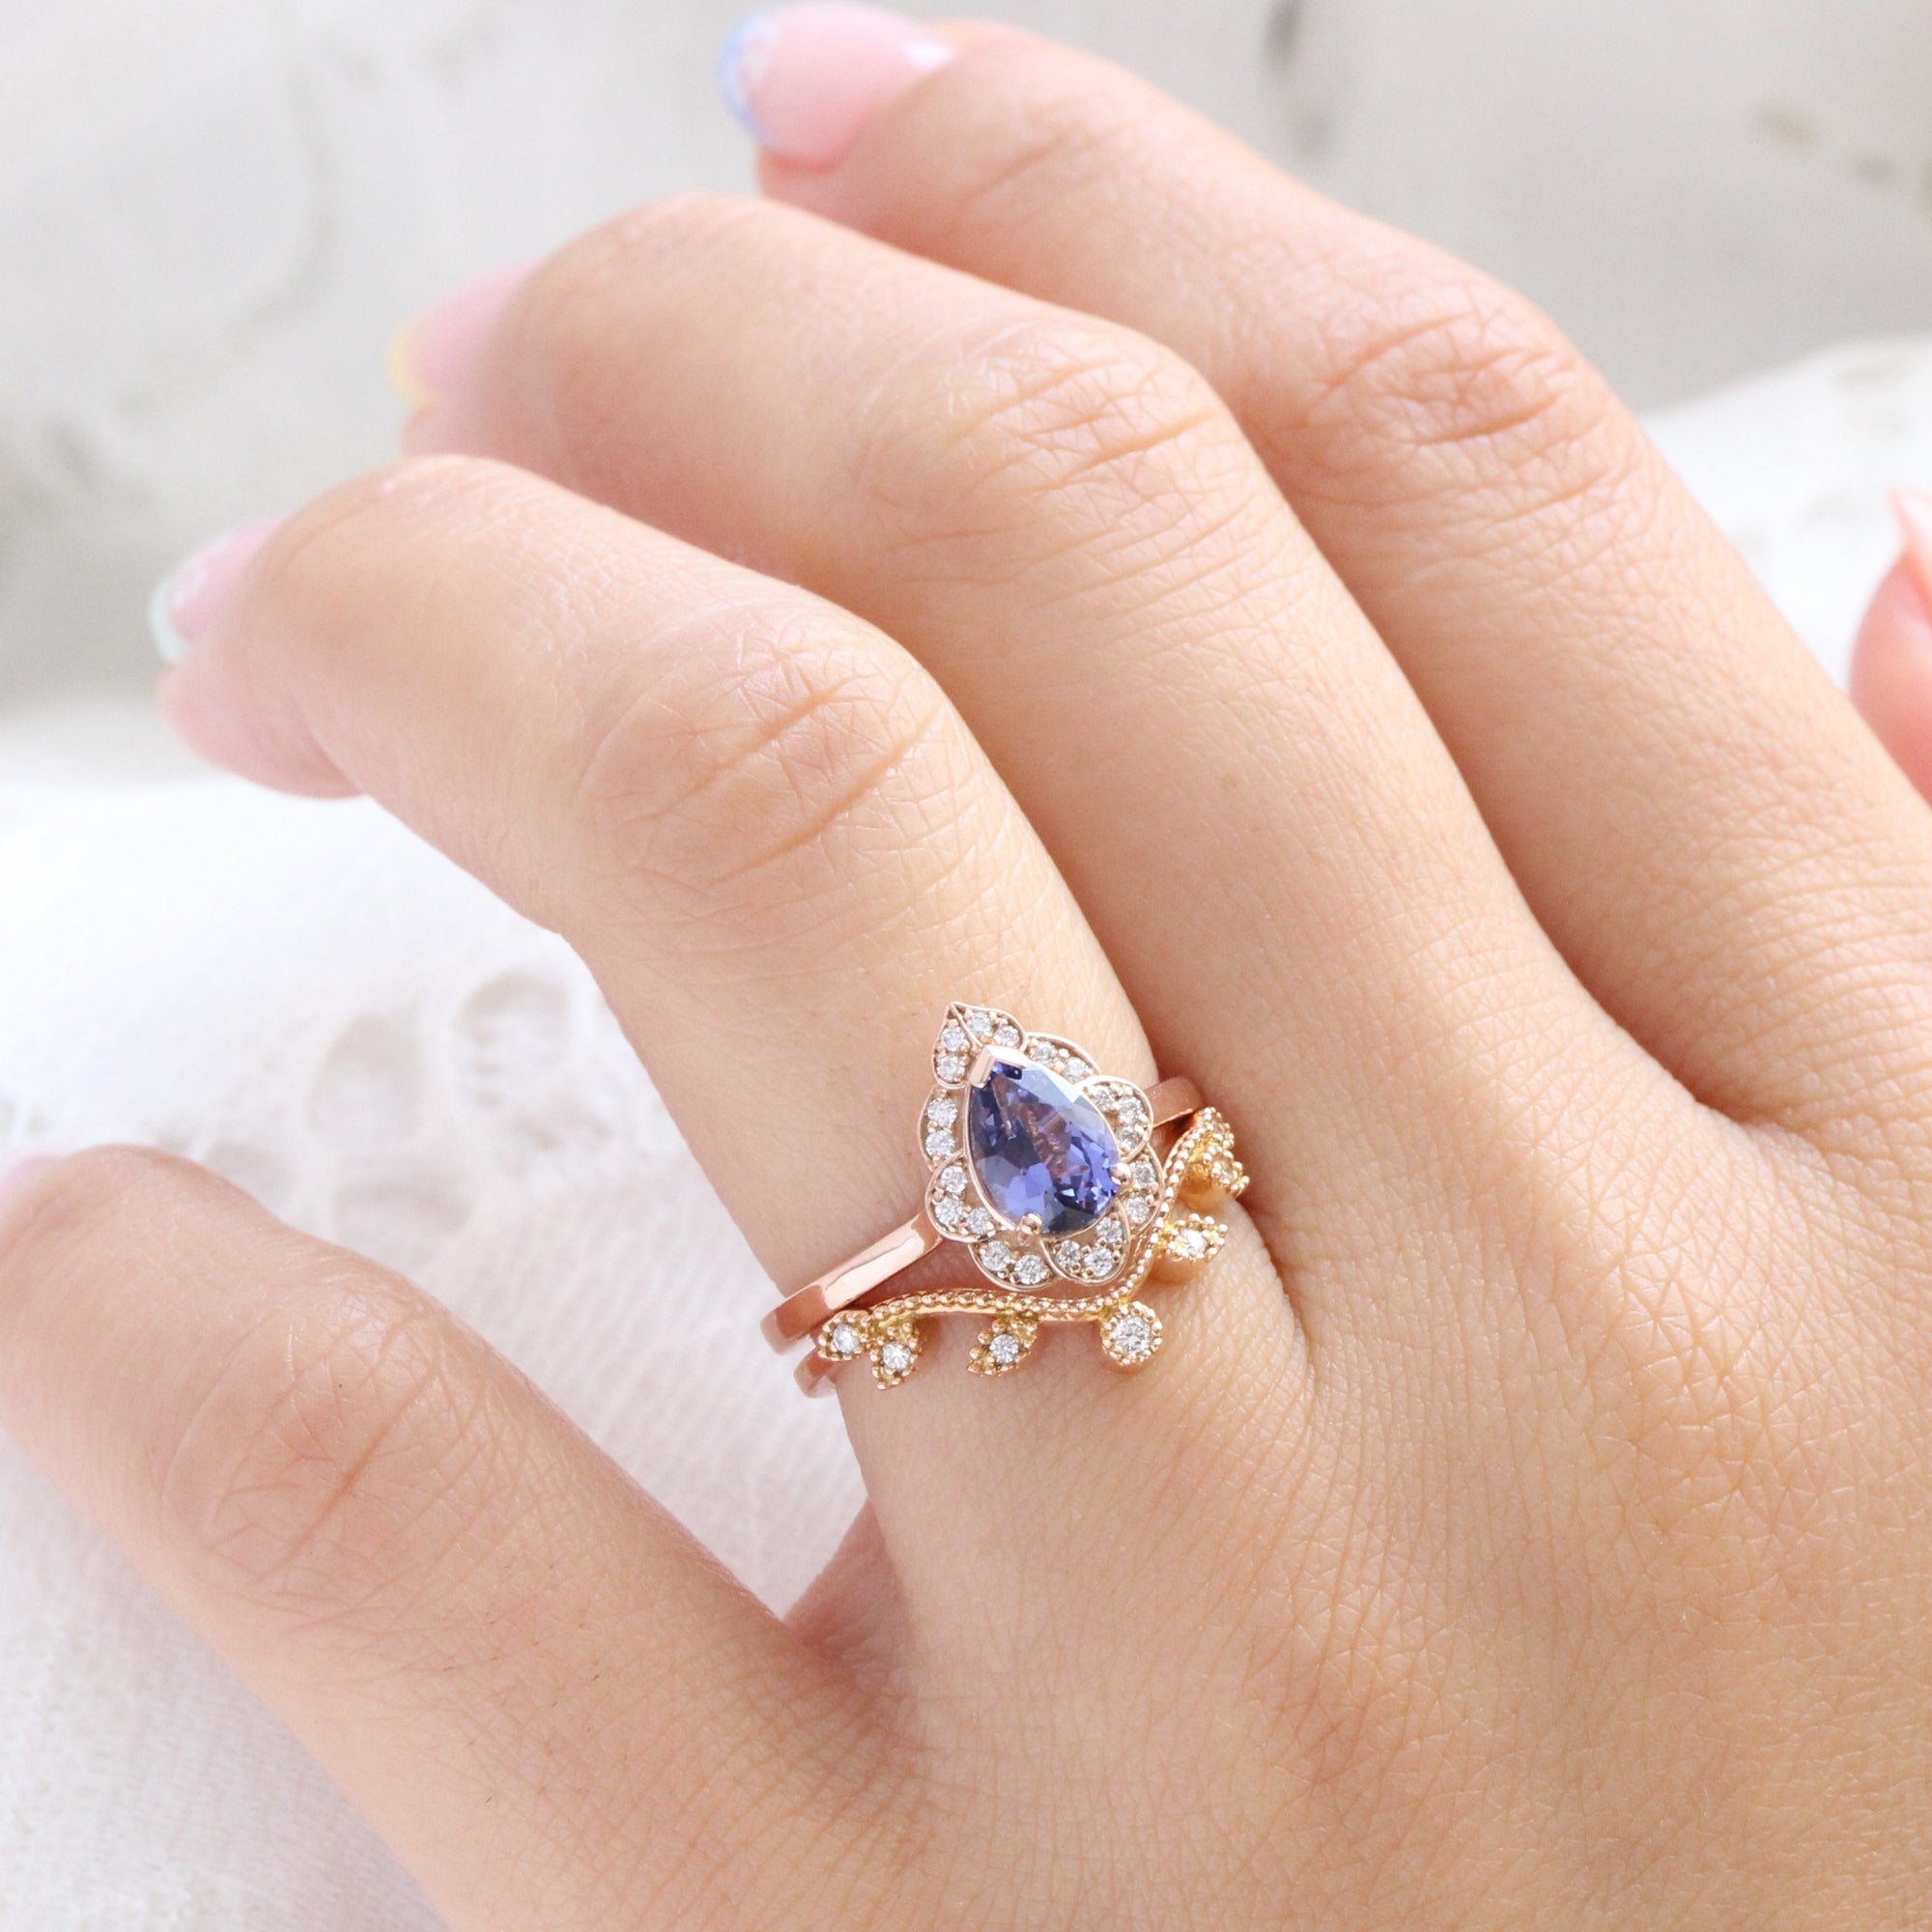 Pear lavender purple sapphire ring rose gold vintage floral sapphire diamond ring la more design jewelry